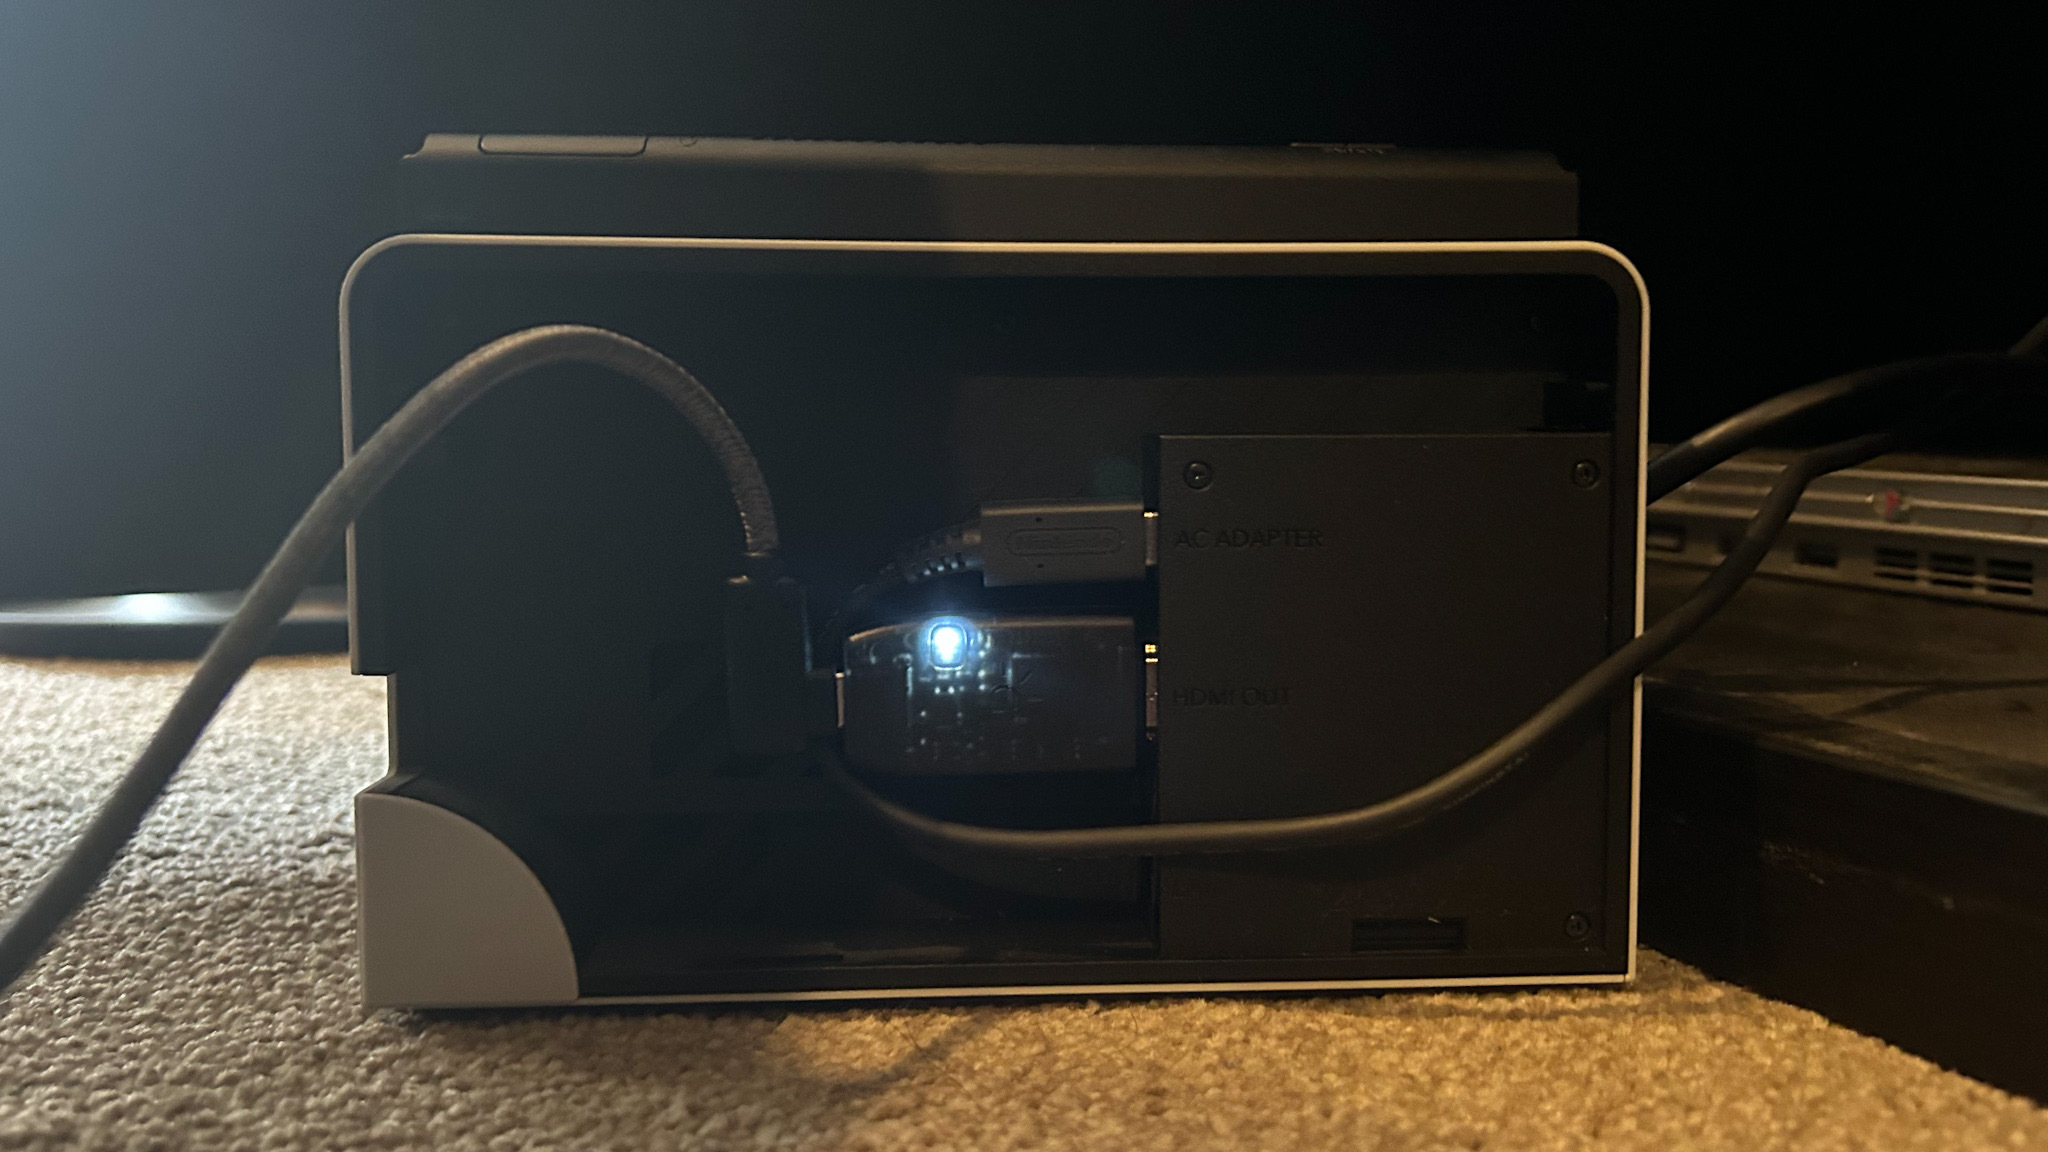 Genki ShadowCast plugged into the back of a Nintendo Switch dock